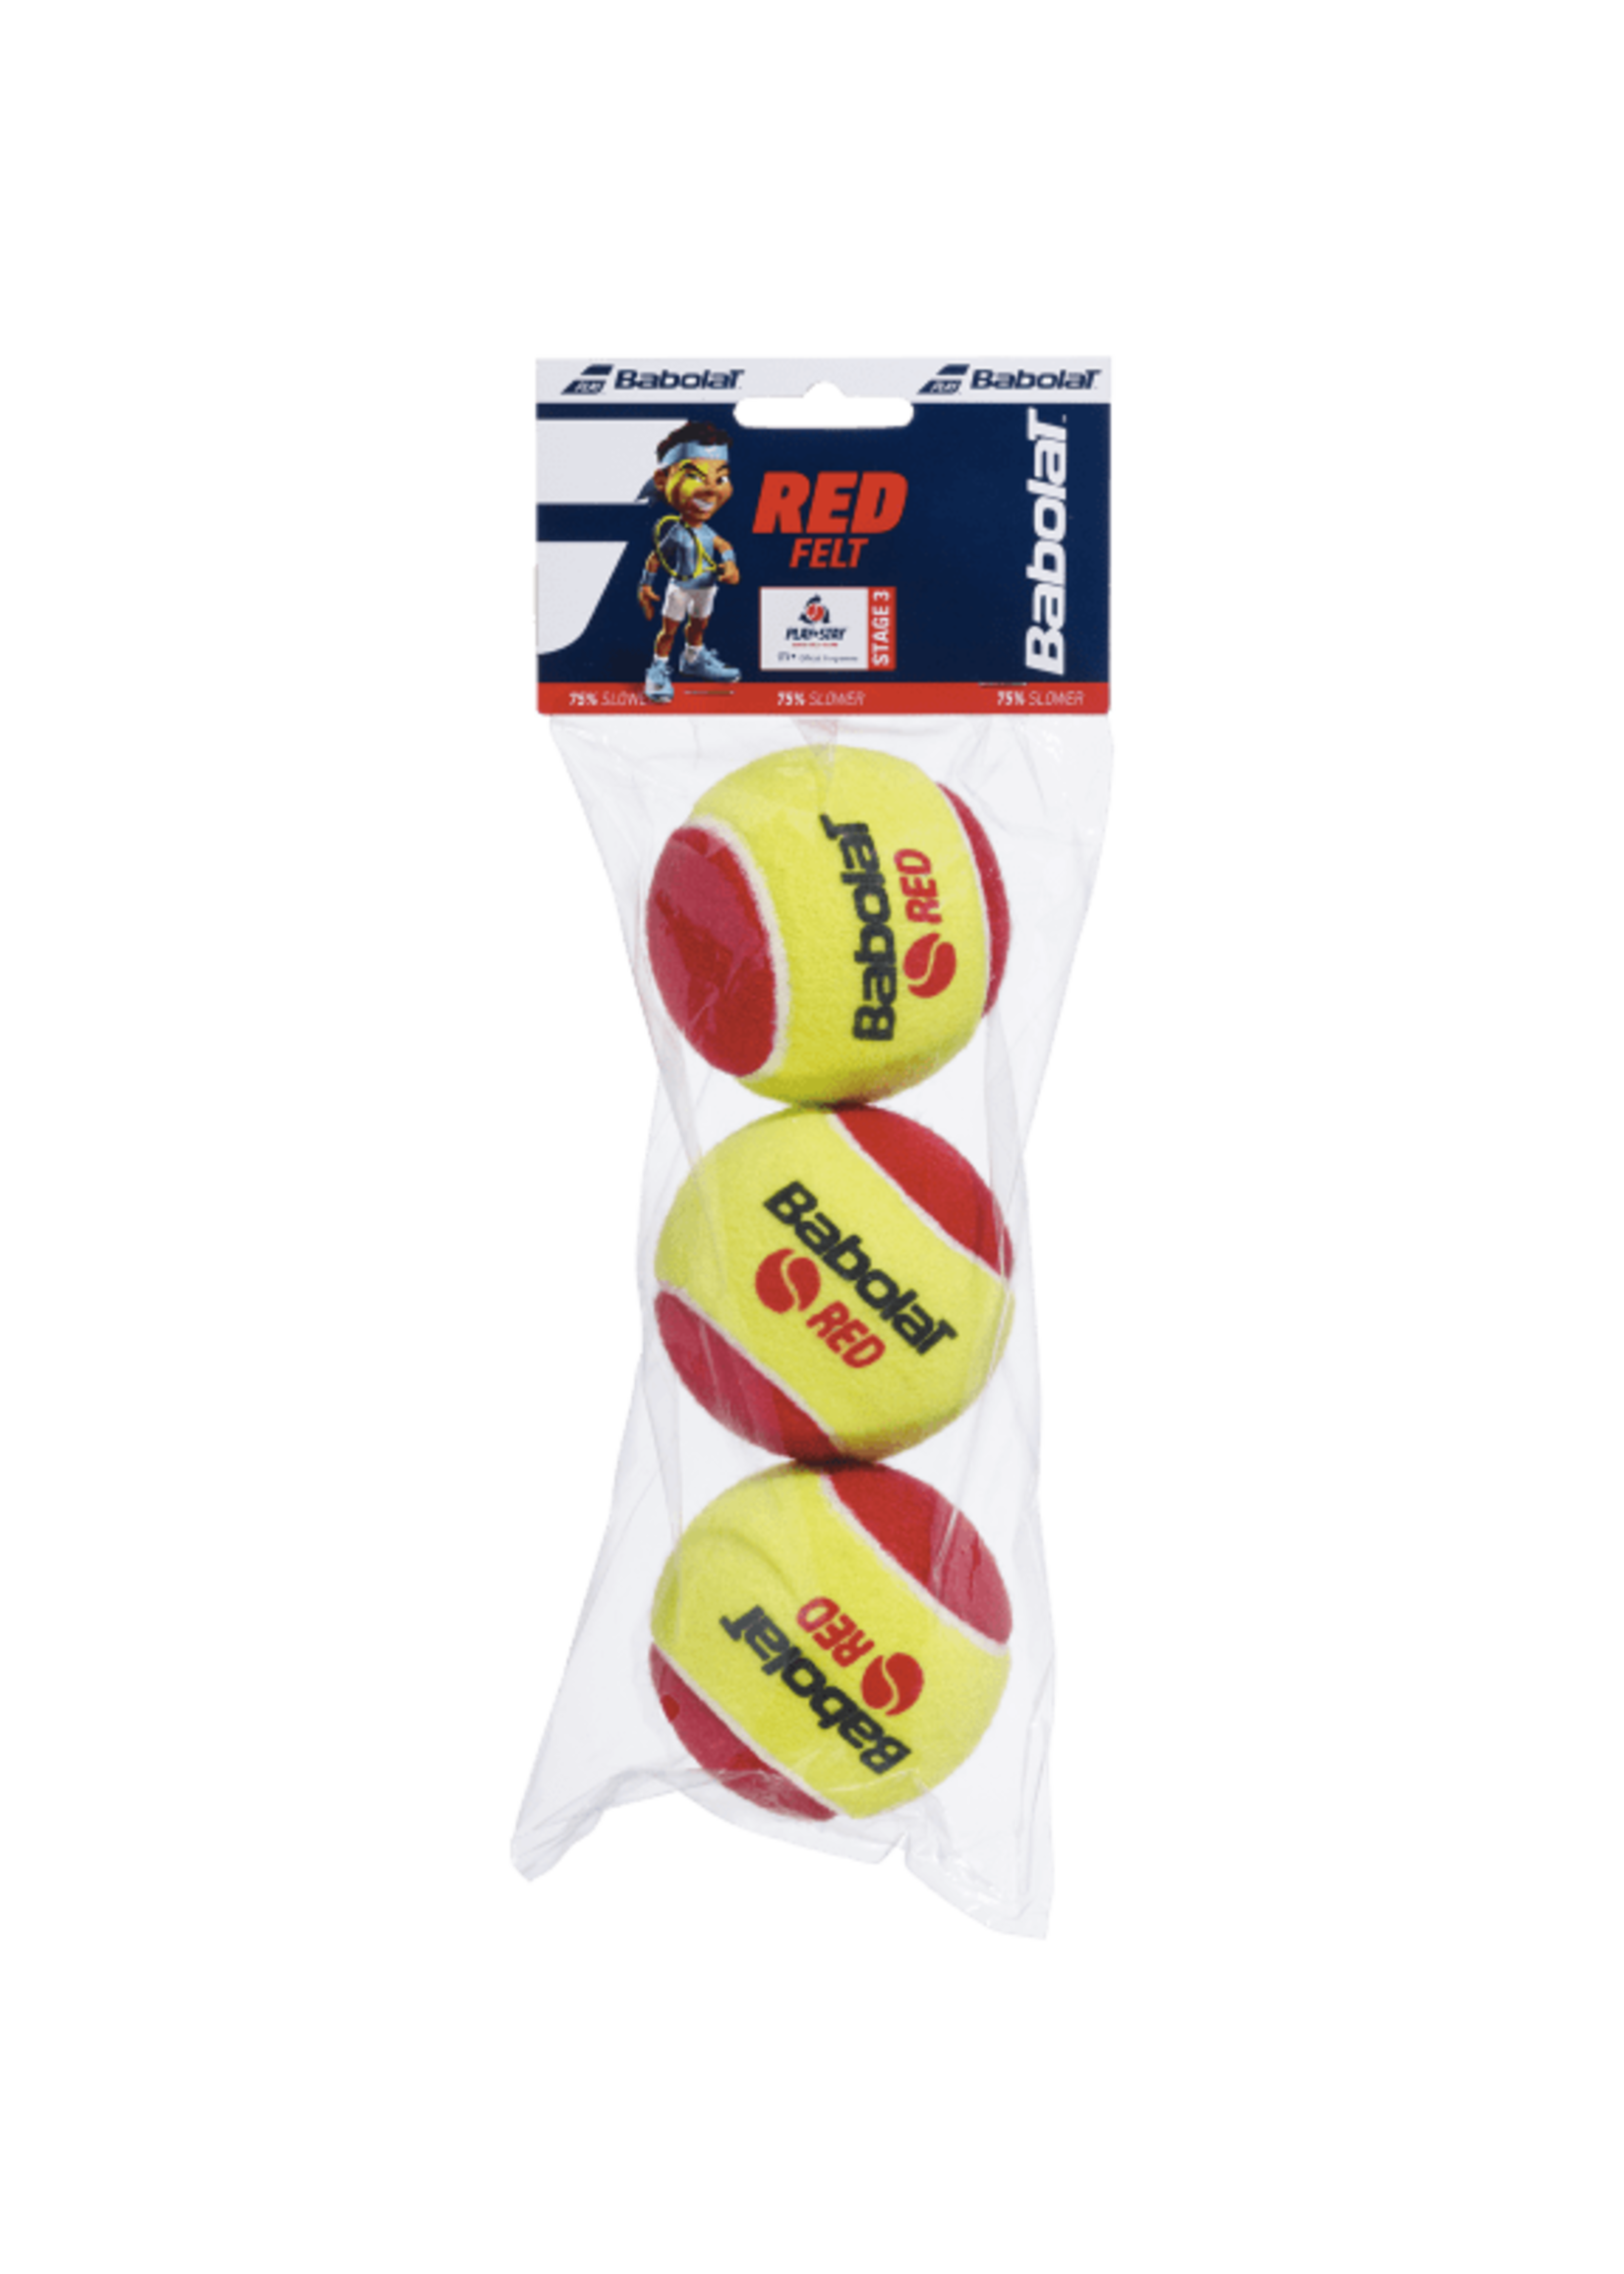 Babolat Babolat Red Junior Tennis Balls (3pk)